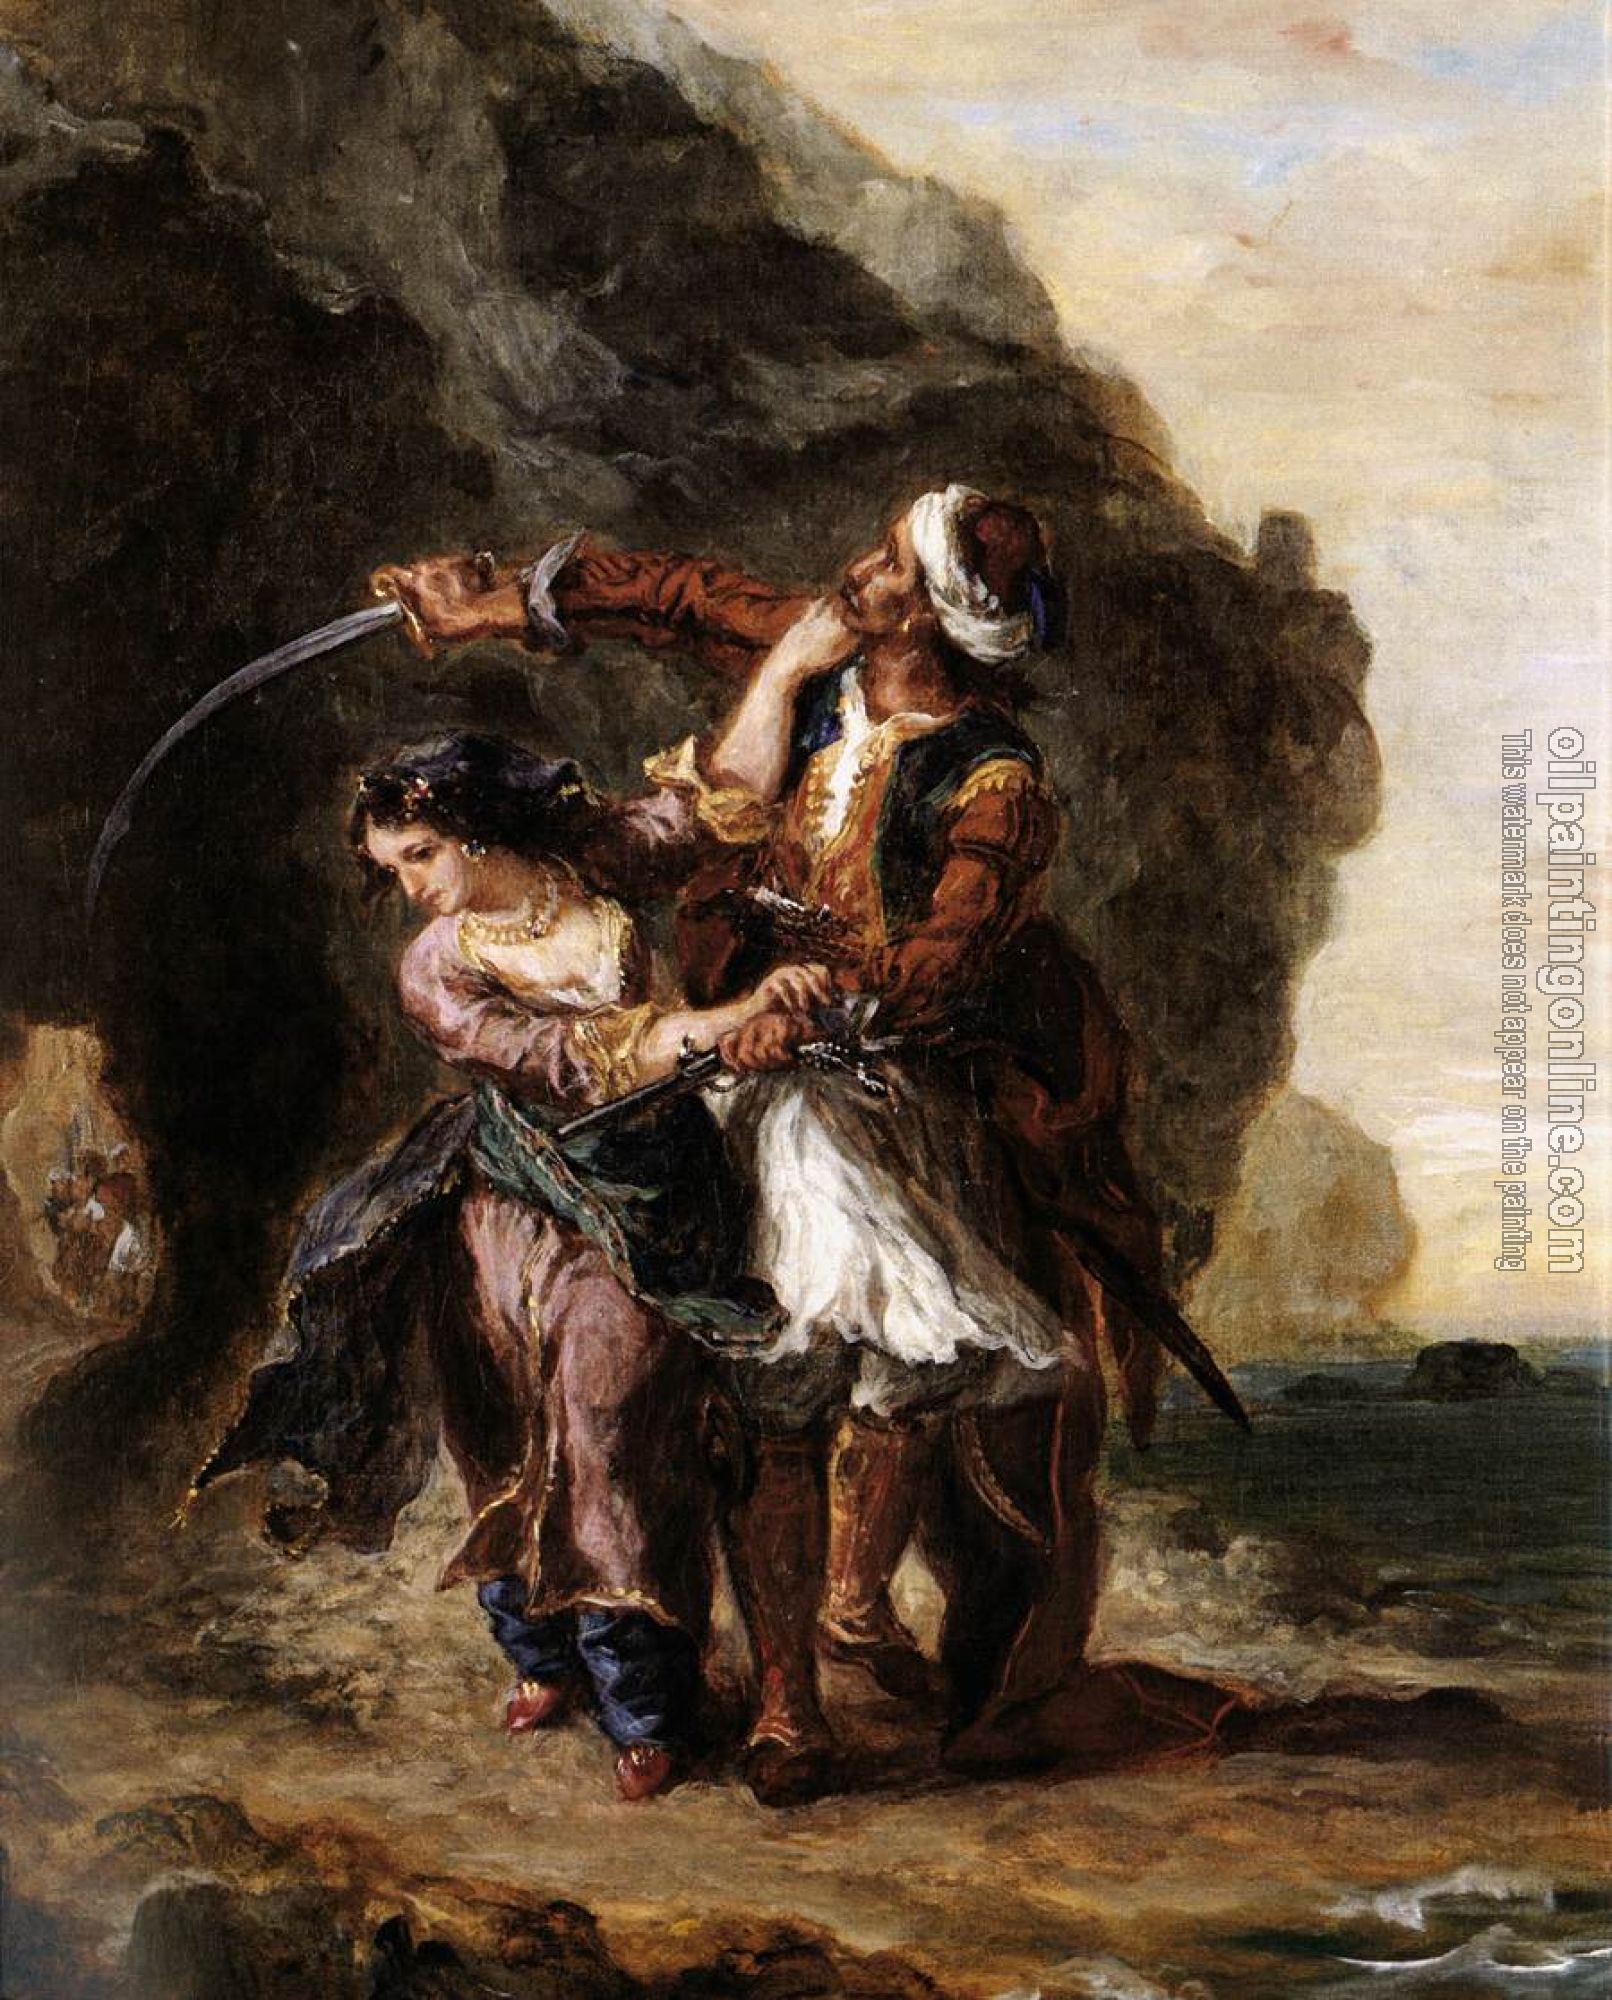 Delacroix, Eugene - The Bride of Abydos